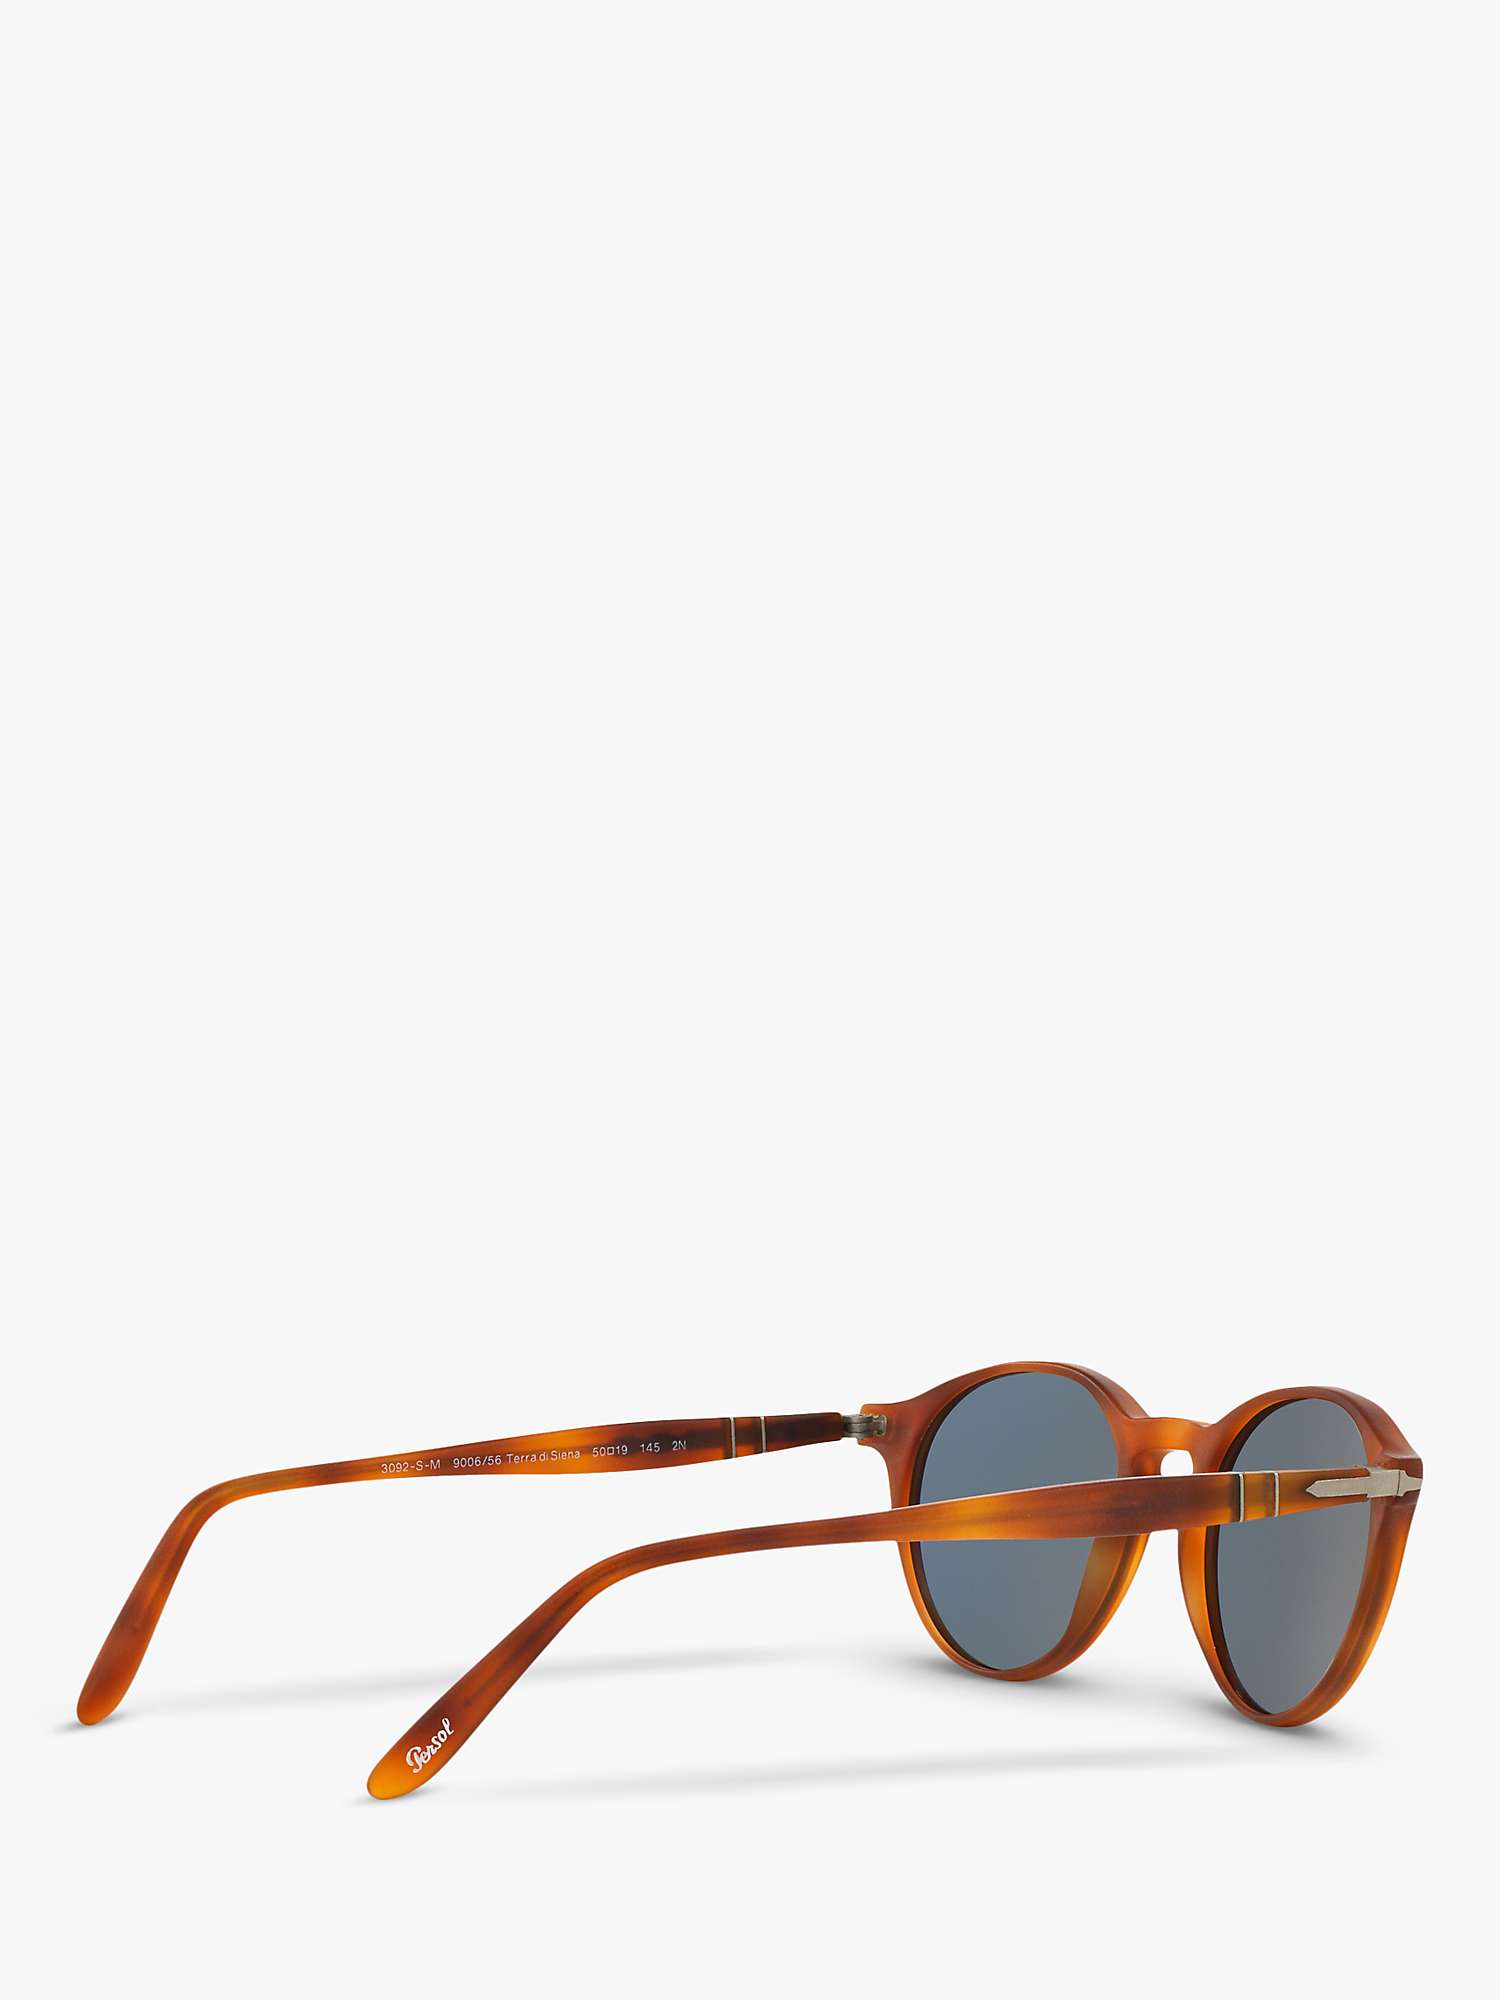 Buy Persol PO3092SM Men's Oval Sunglasses, Terra di Siena/Blue Online at johnlewis.com